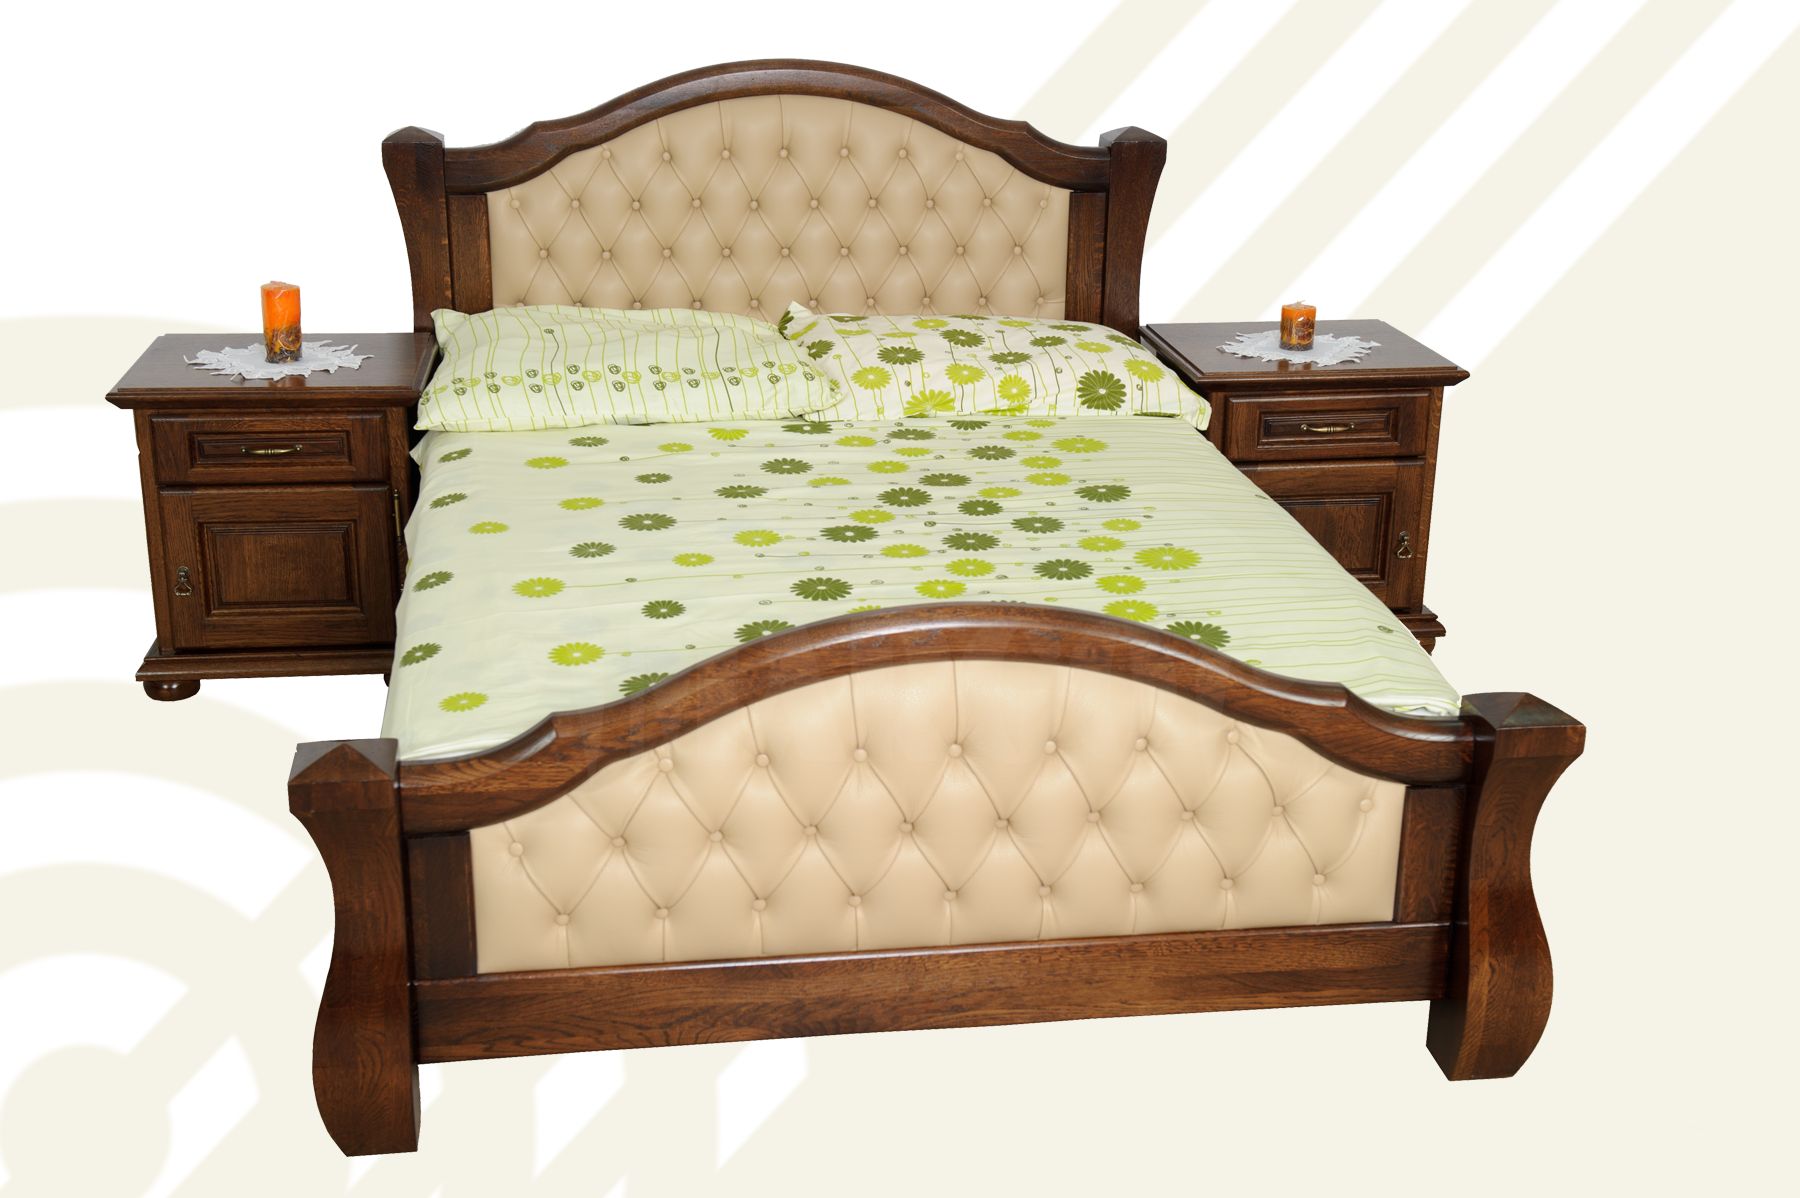 Dubová postel Major 205 cm x 225 cm